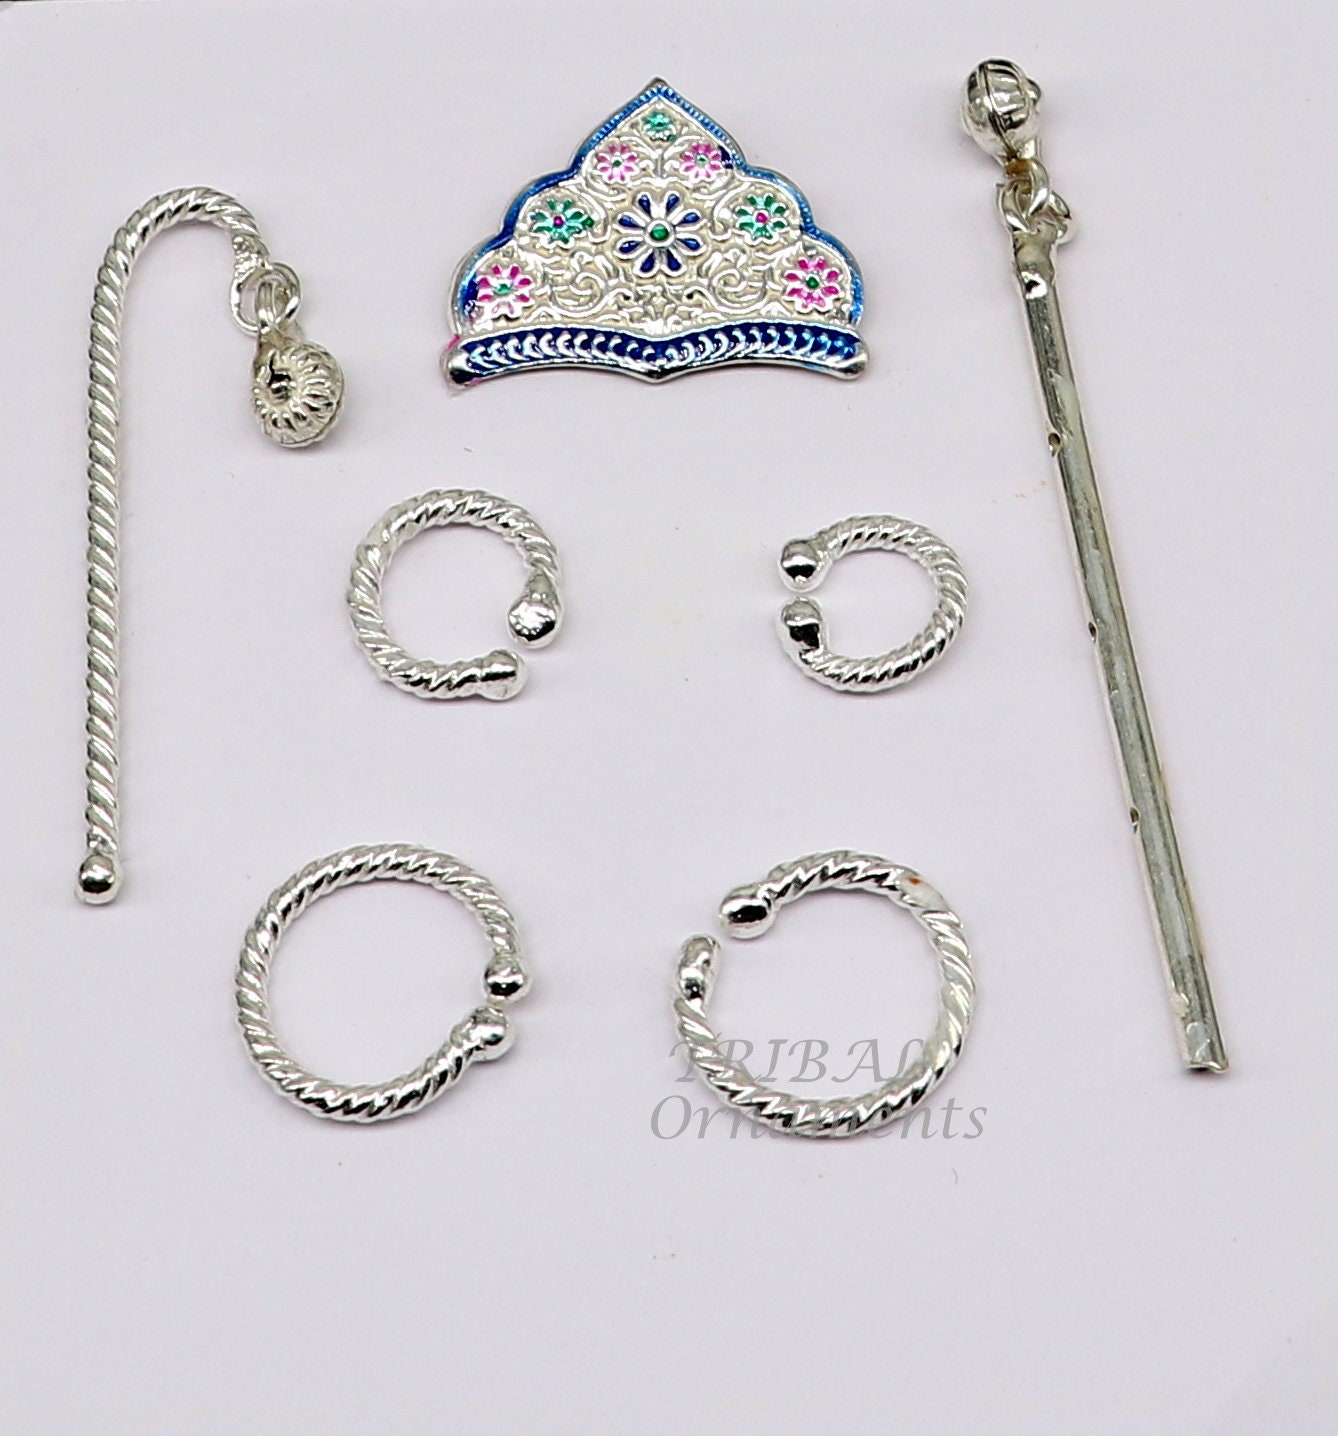 925 sterling silver handmade lord krishna laddu gopala jewelry set, bracelet, anklets, flute, mukut, best baby krishna jewlery su1006 - TRIBAL ORNAMENTS